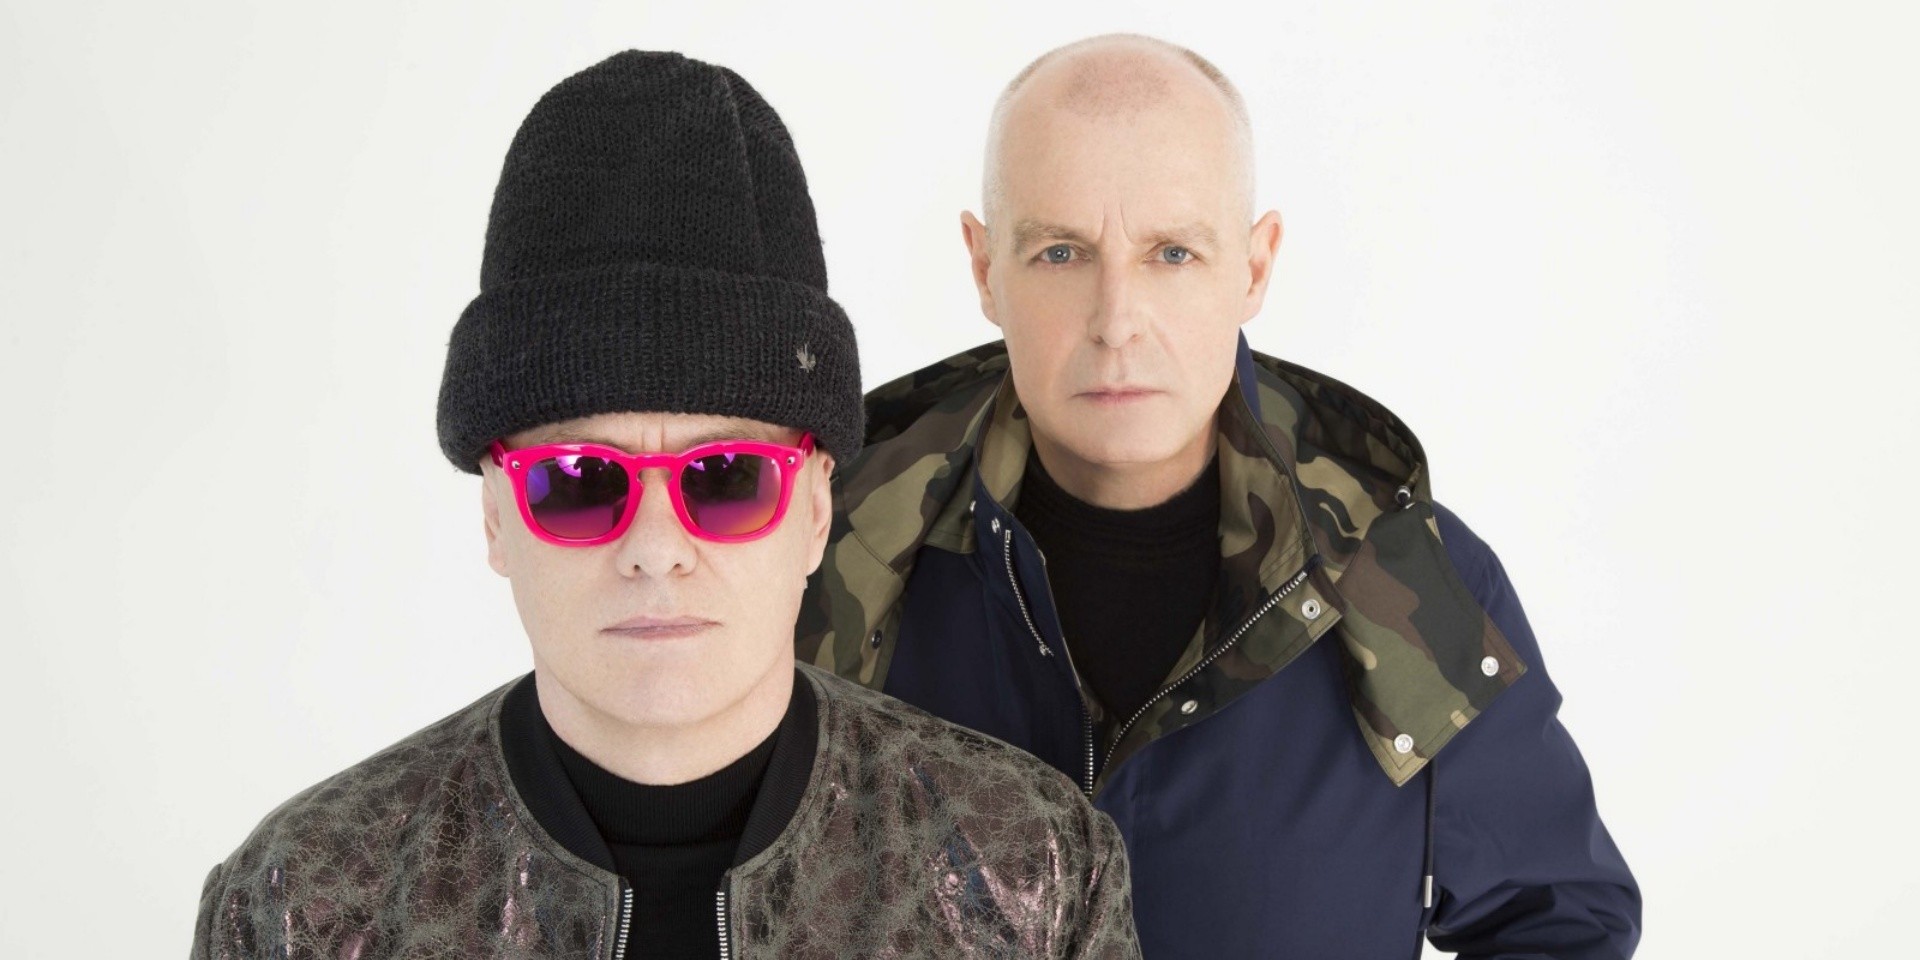 Pet Shop Boys announce Asia tour - includes stops in Singapore, Hong Kong, Tokyo, Osaka and Bangkok